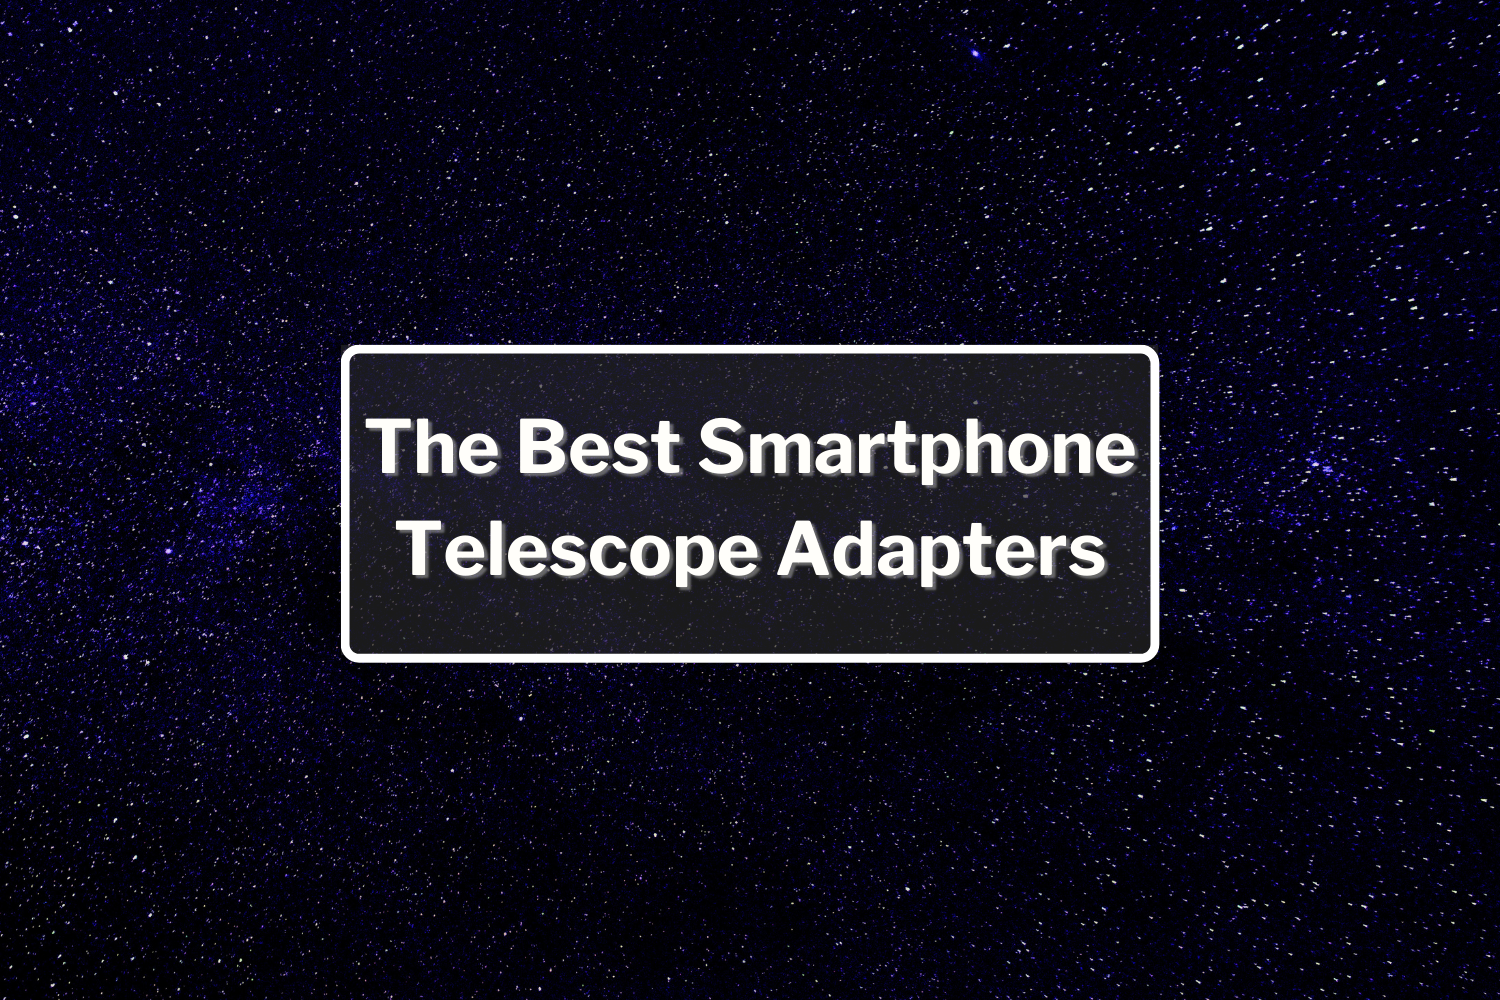 The Best Smartphone Telescope Adapters